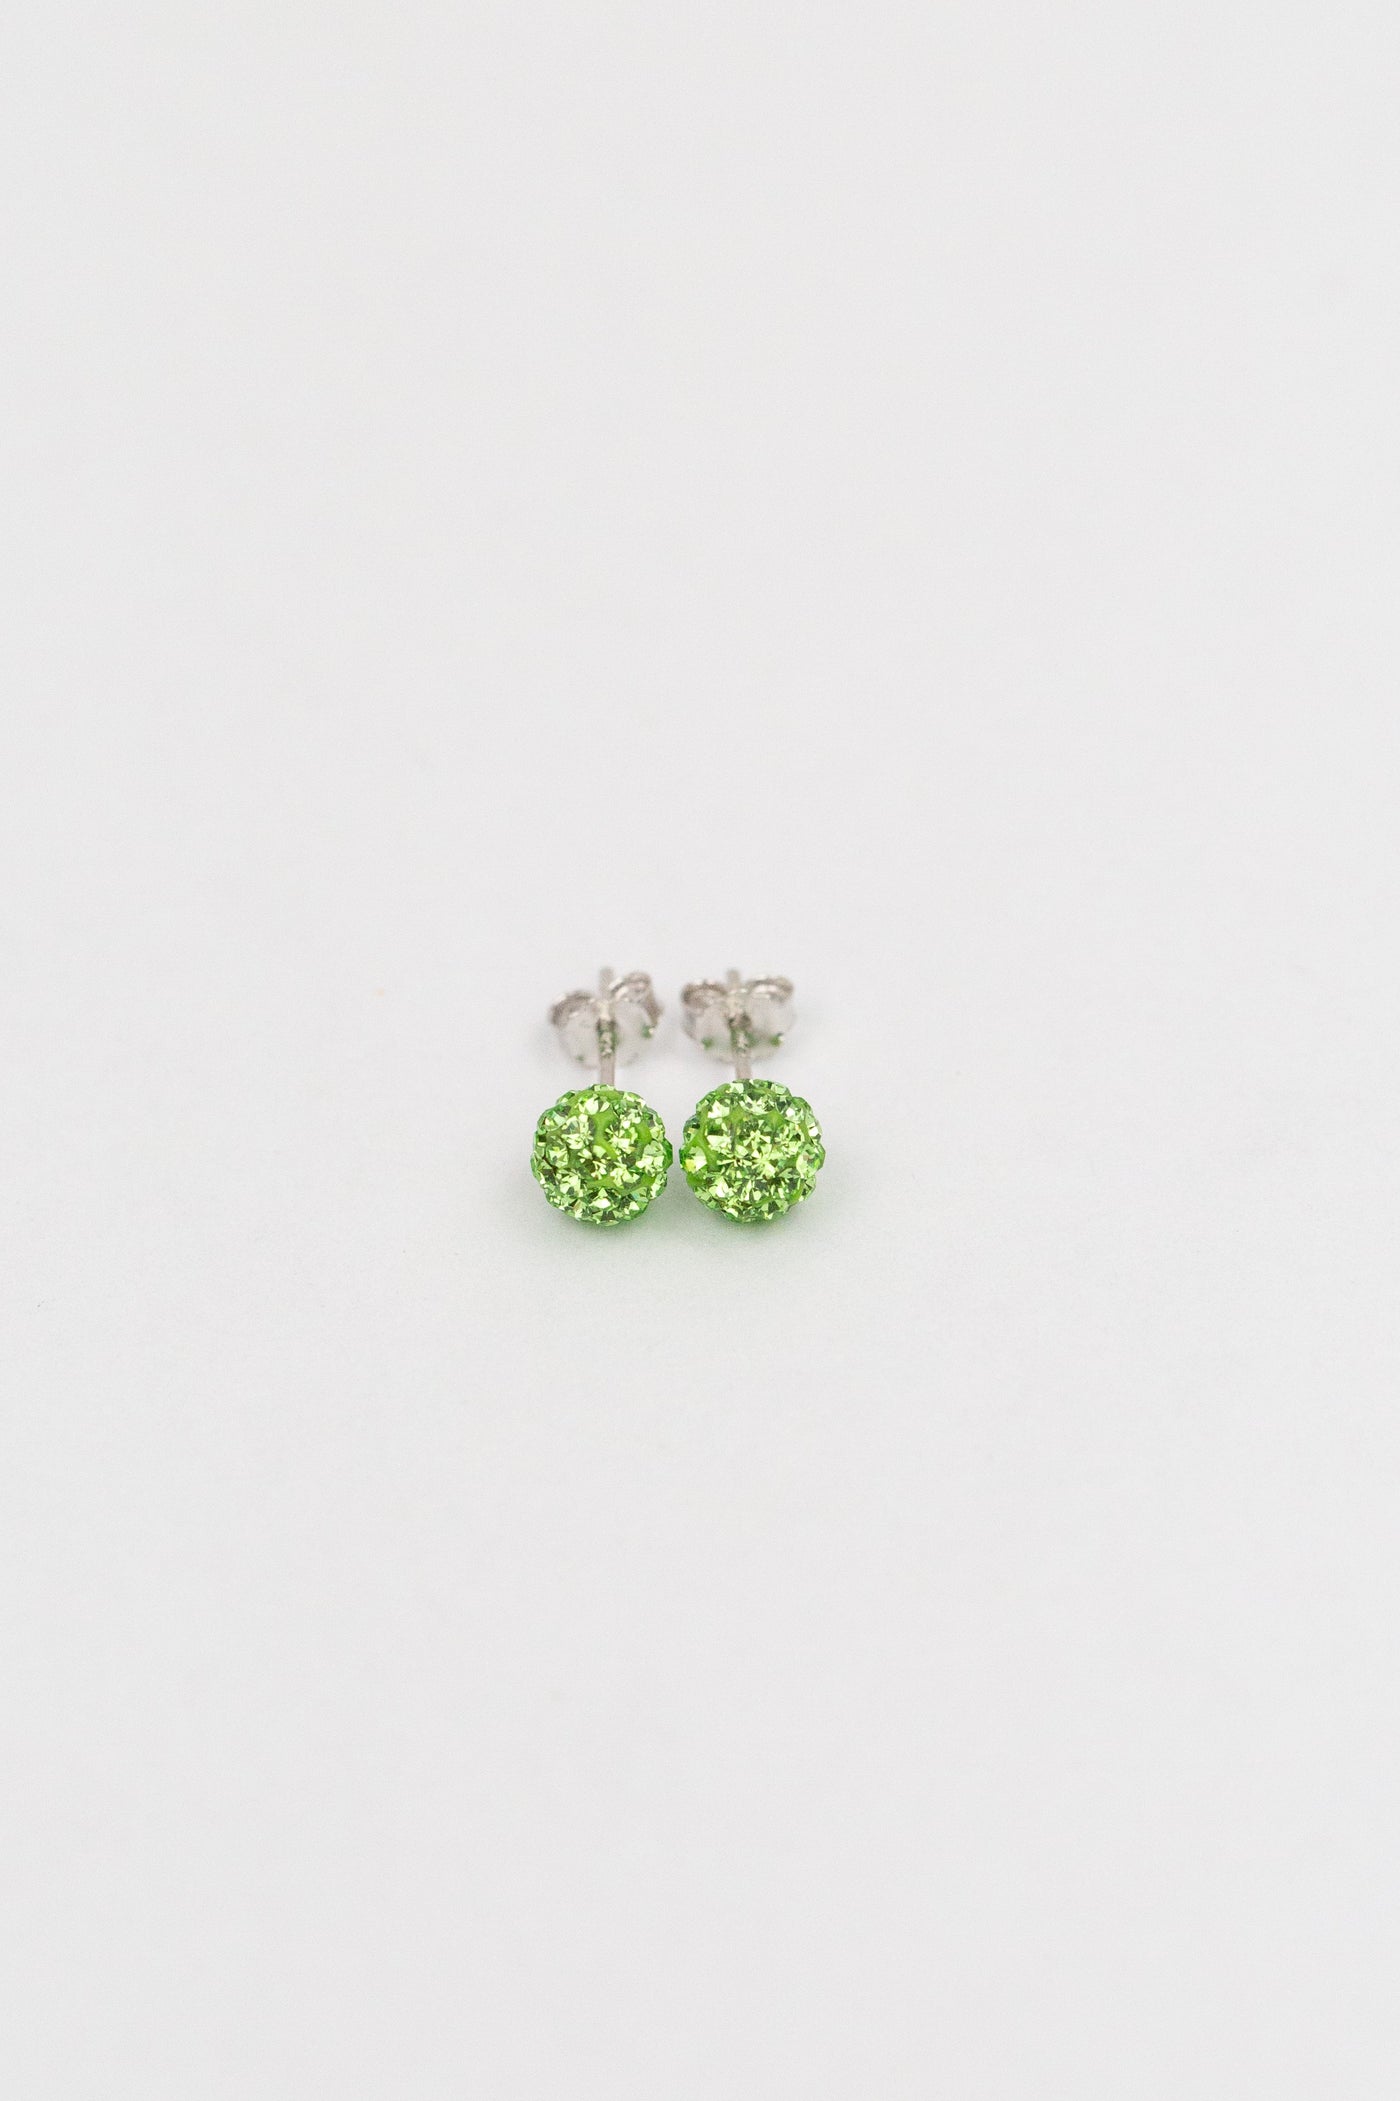 6mm Mini Disco Ball Crystal Silver Stud Earrings in Peridot crystal| Annie and Sisters | sister stud earrings, for kids, children's jewelry, kid's jewelry, best friend